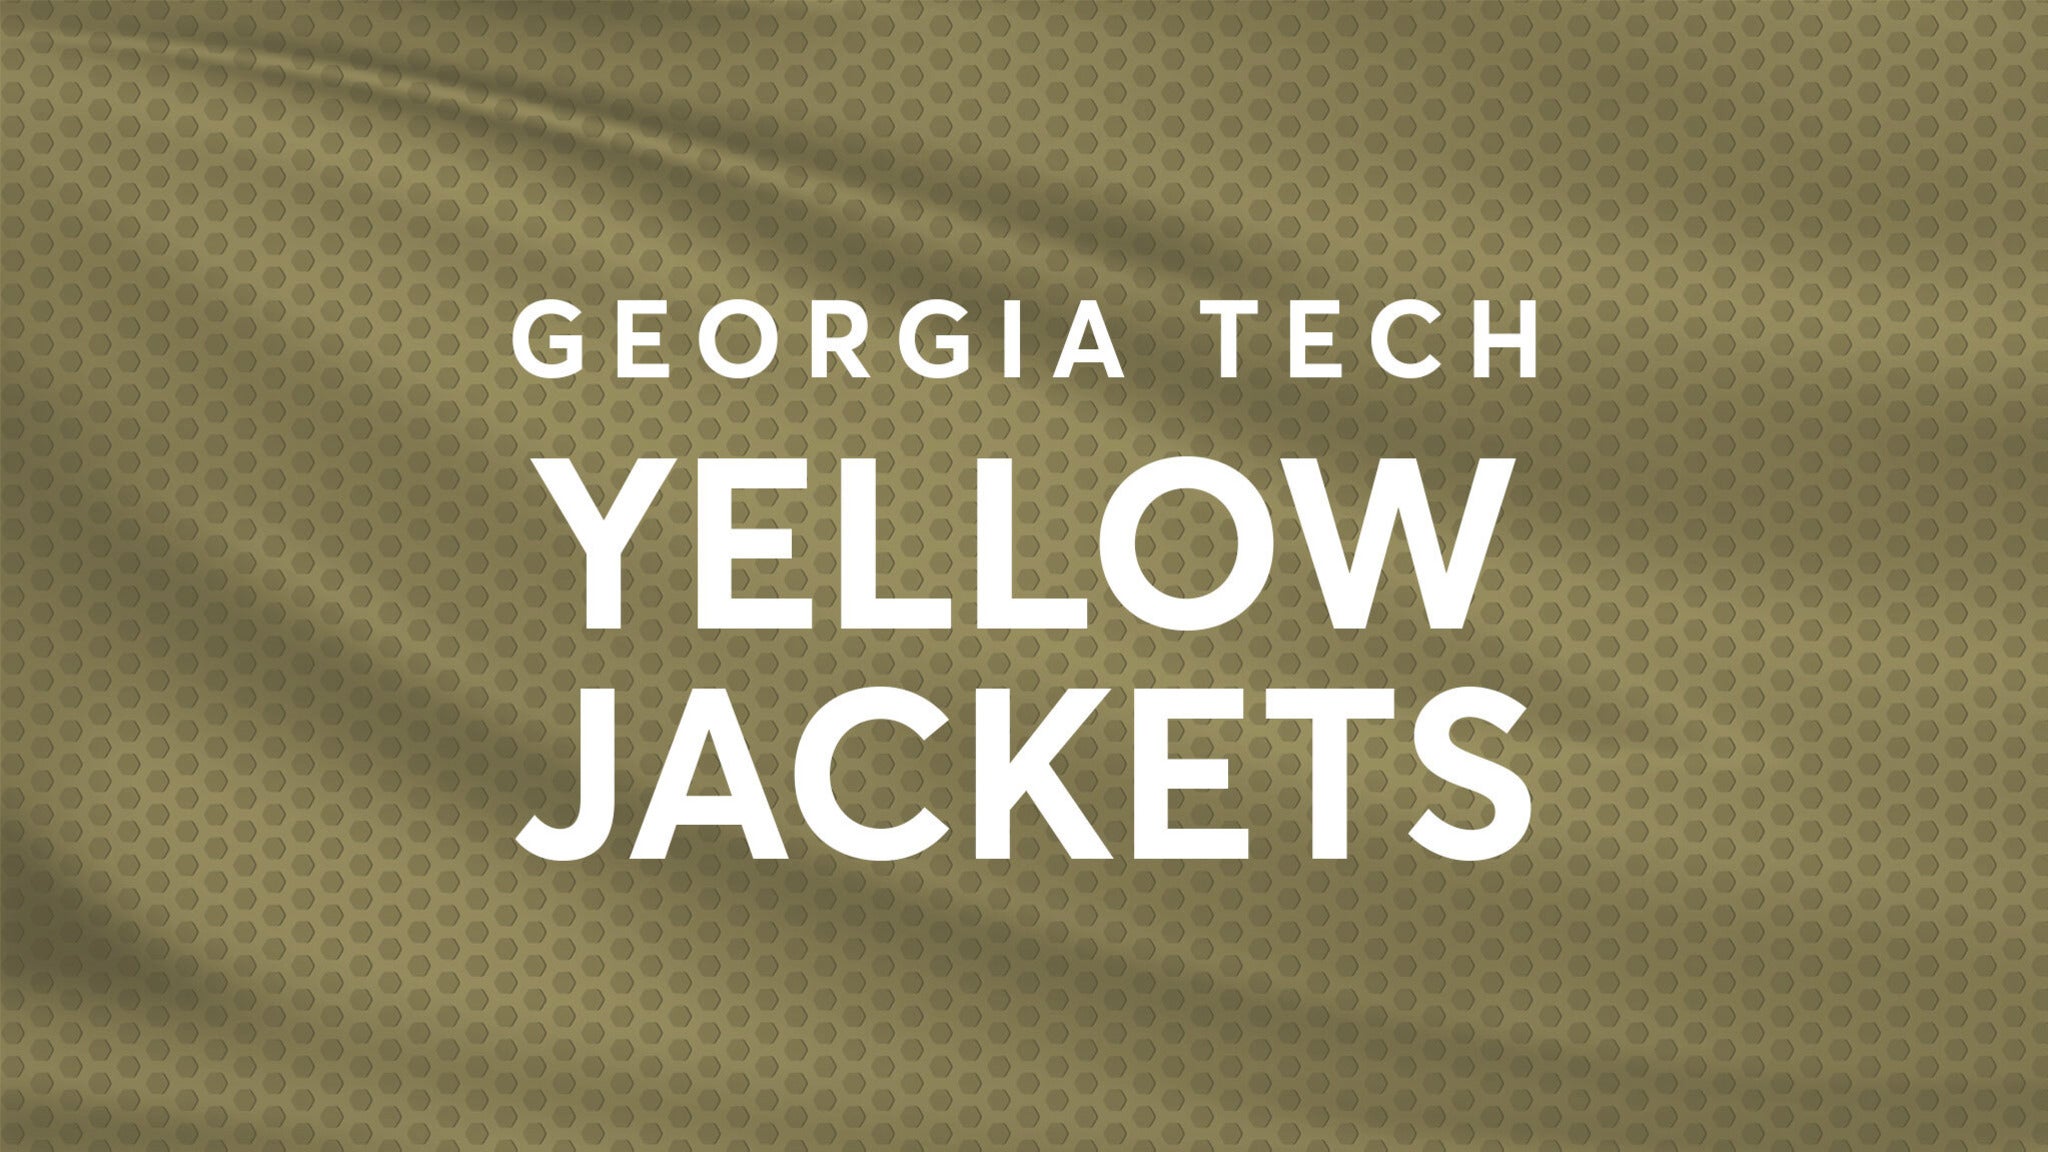 Georgia Tech Yellow Jackets Baseball presale information on freepresalepasswords.com